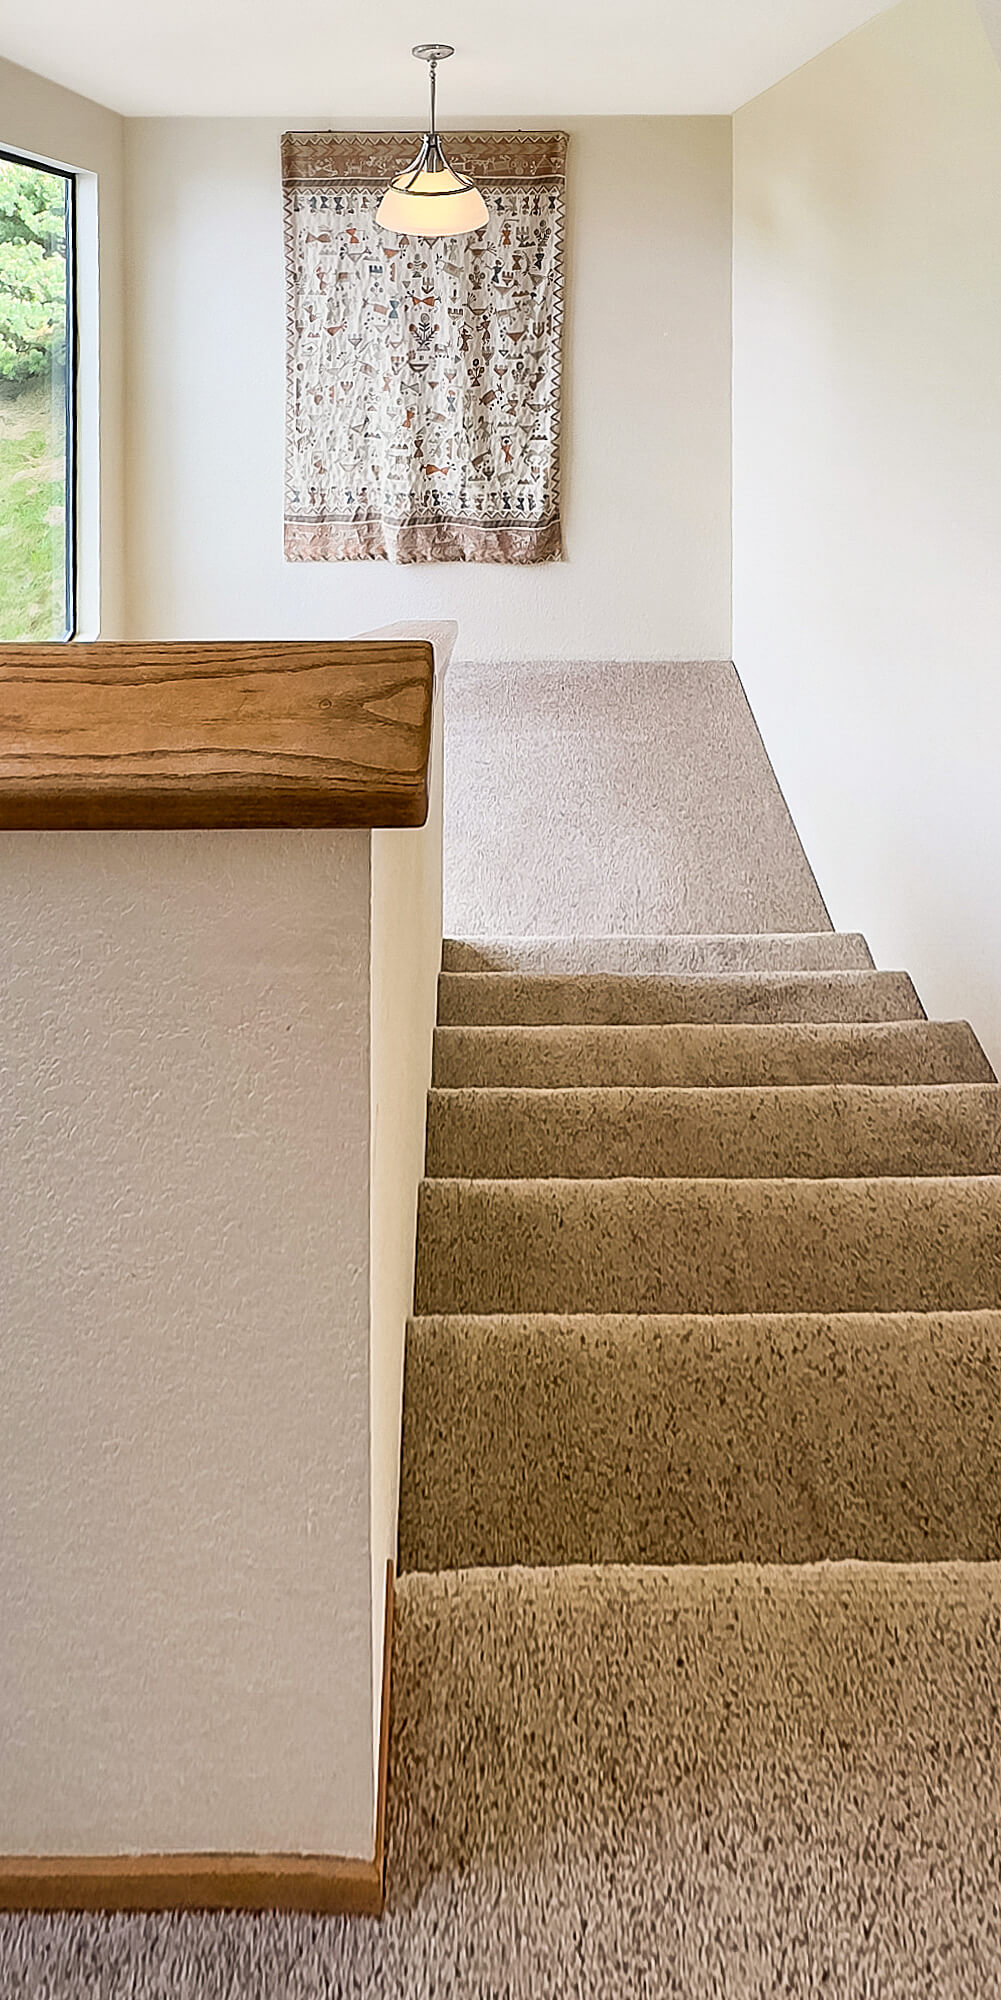 Mare Vista: bright carpeted stairway down to 1st floor